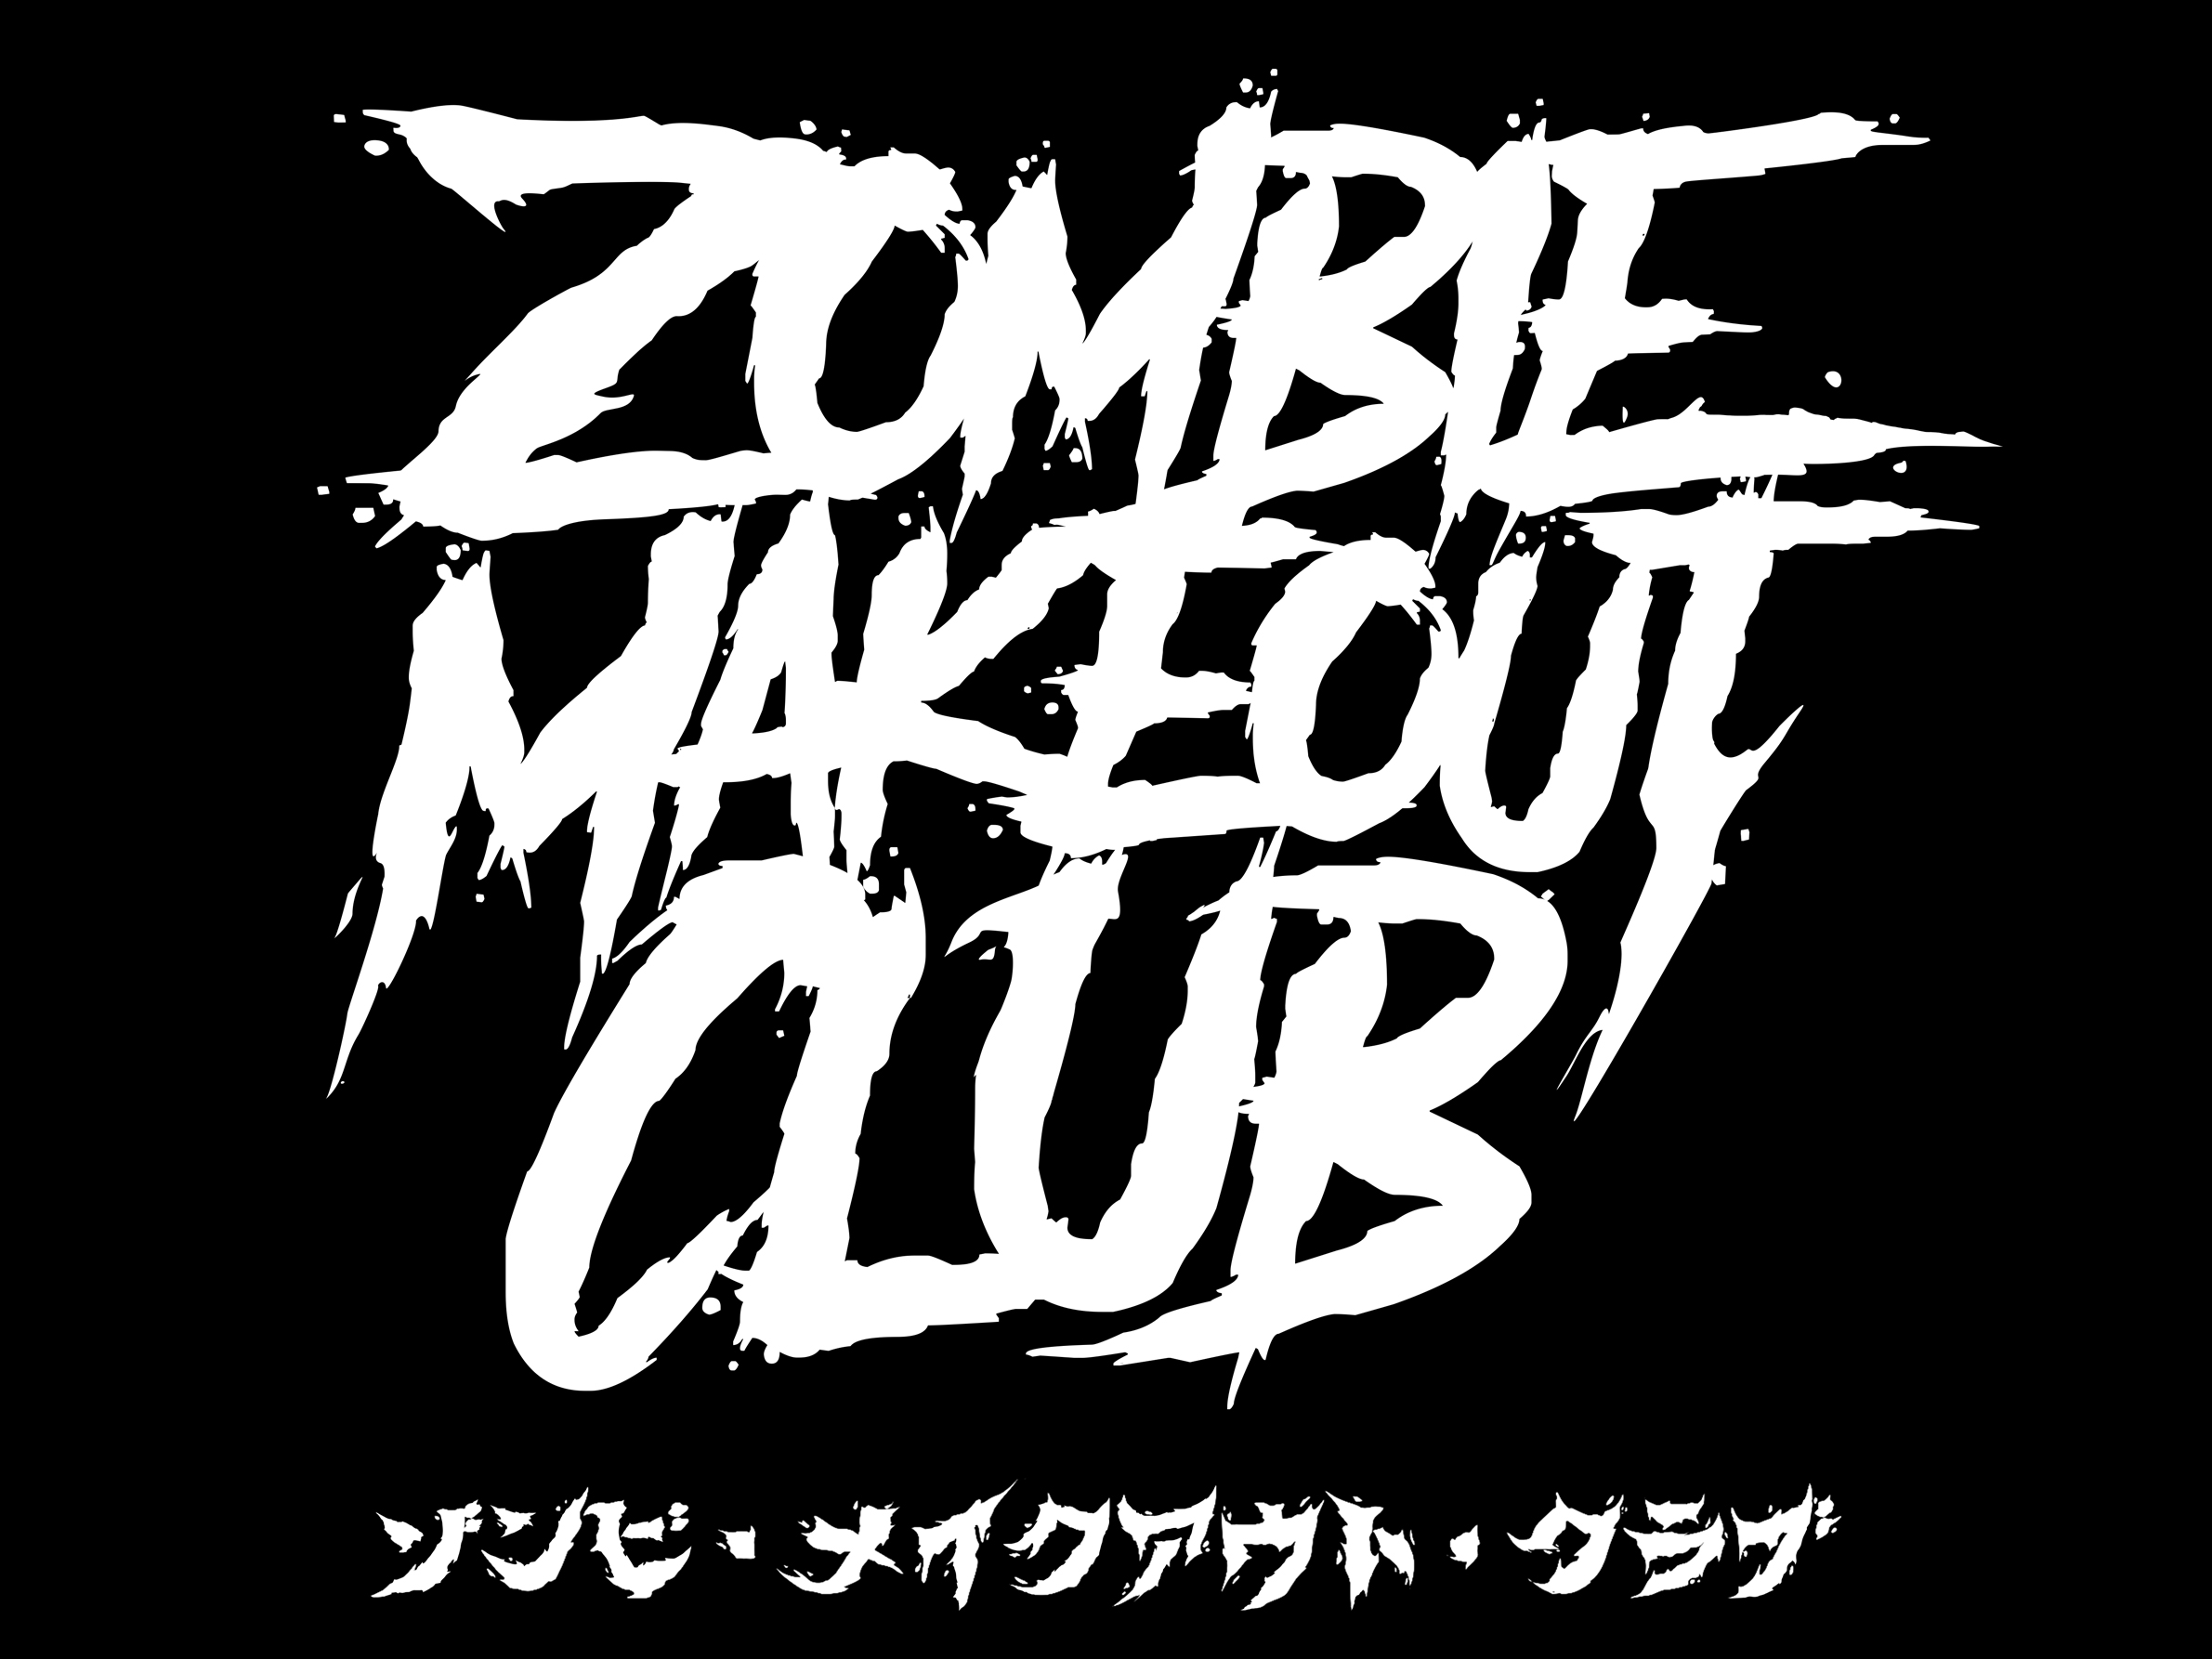 Zombie Makeout Club